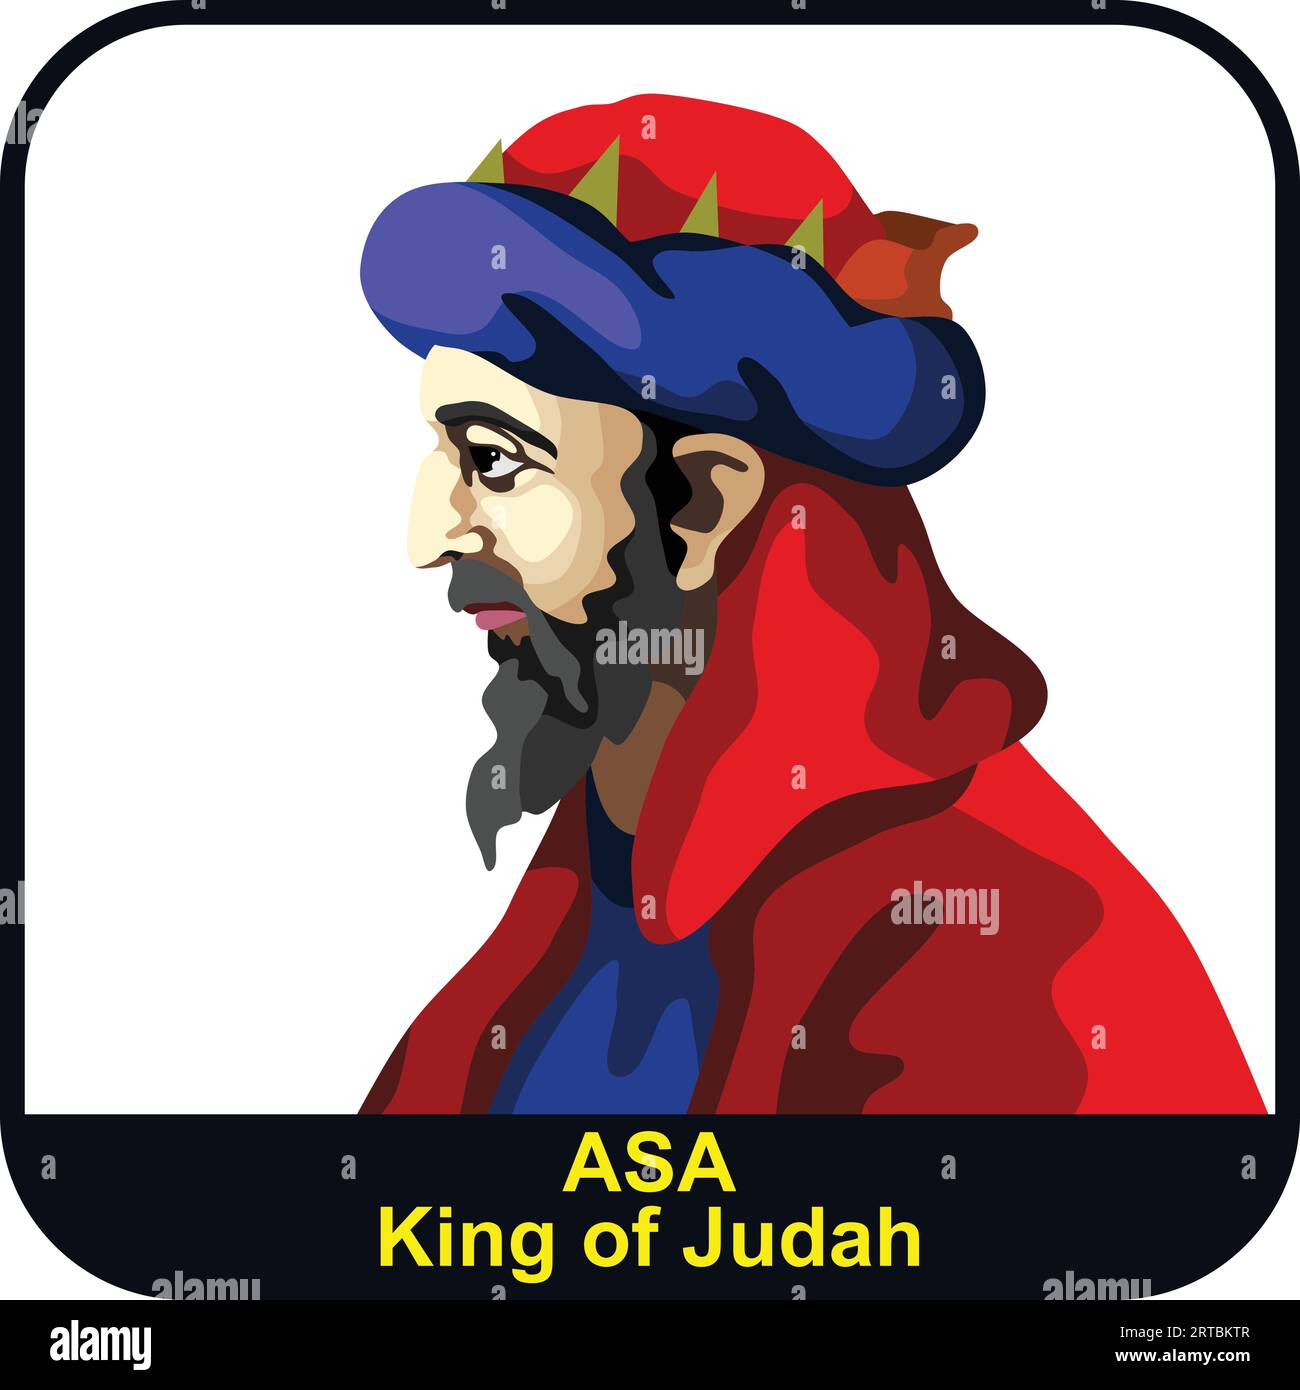 Asa 3rd Judah King Stock Vector